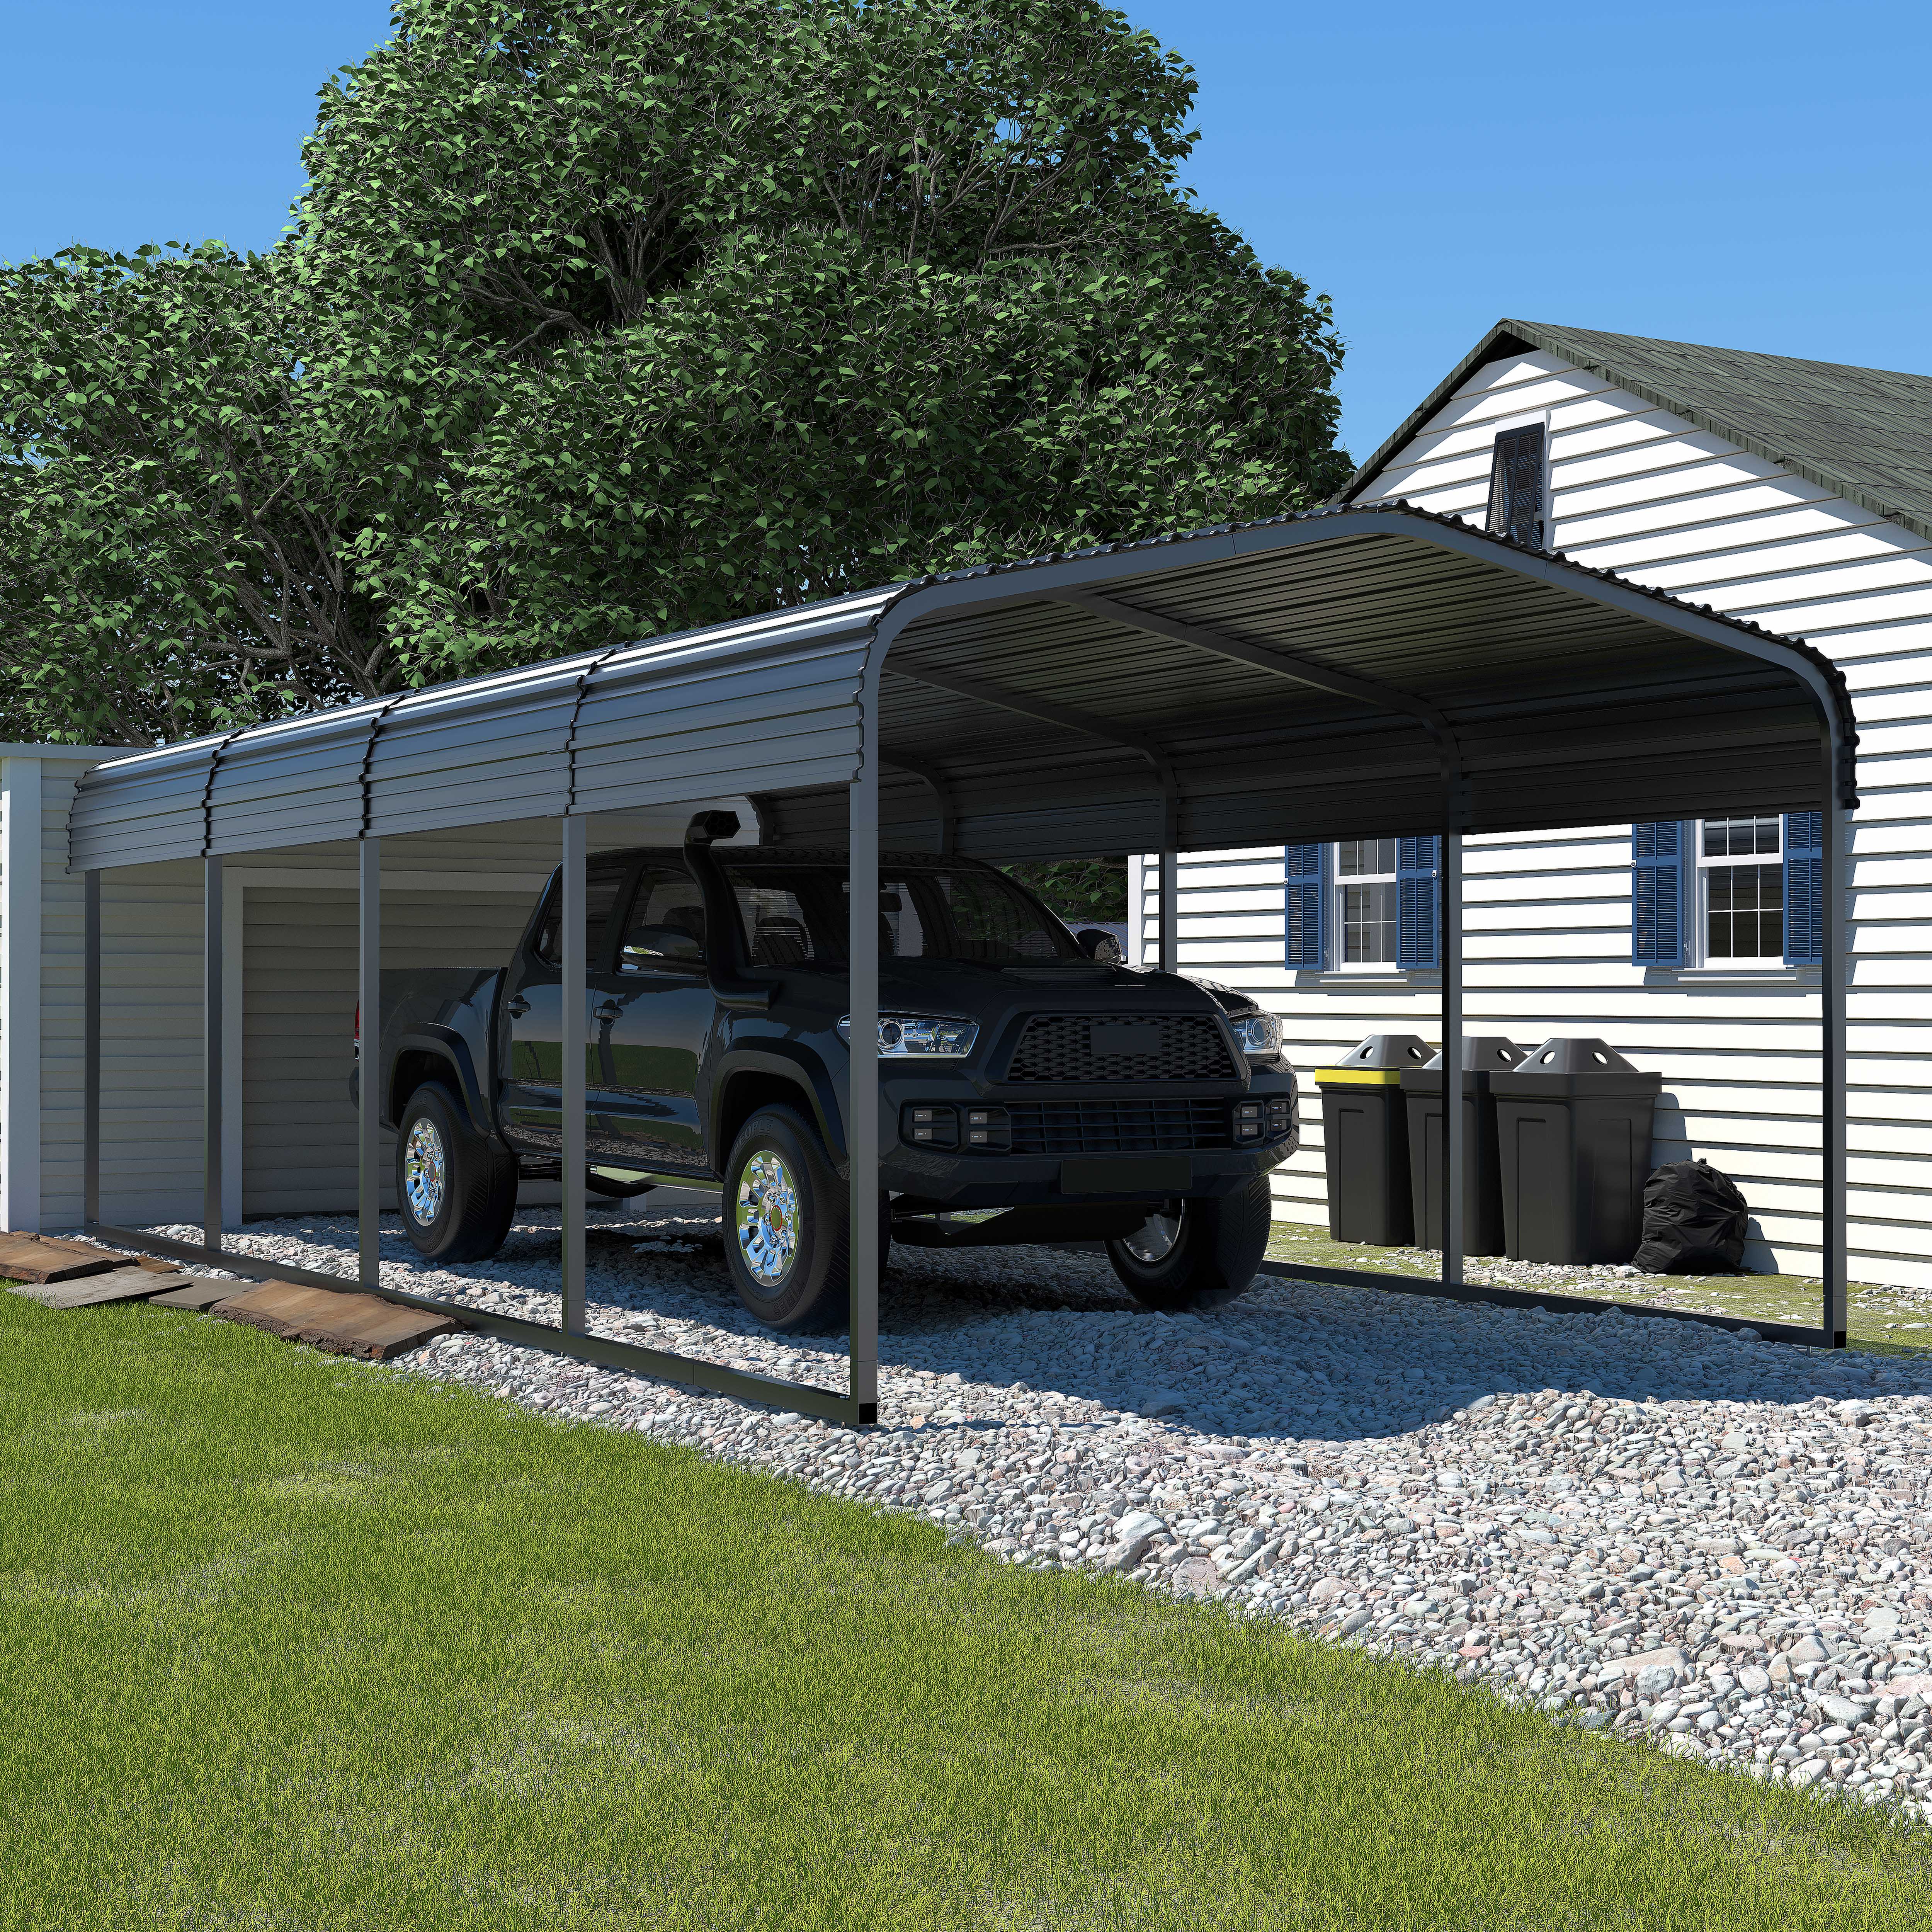 VEIKOUS 20' x 12' Outdoor Carport, Galvanized Metal Heavy Duty Garage Car Storage Shelter, Grey - image 1 of 18